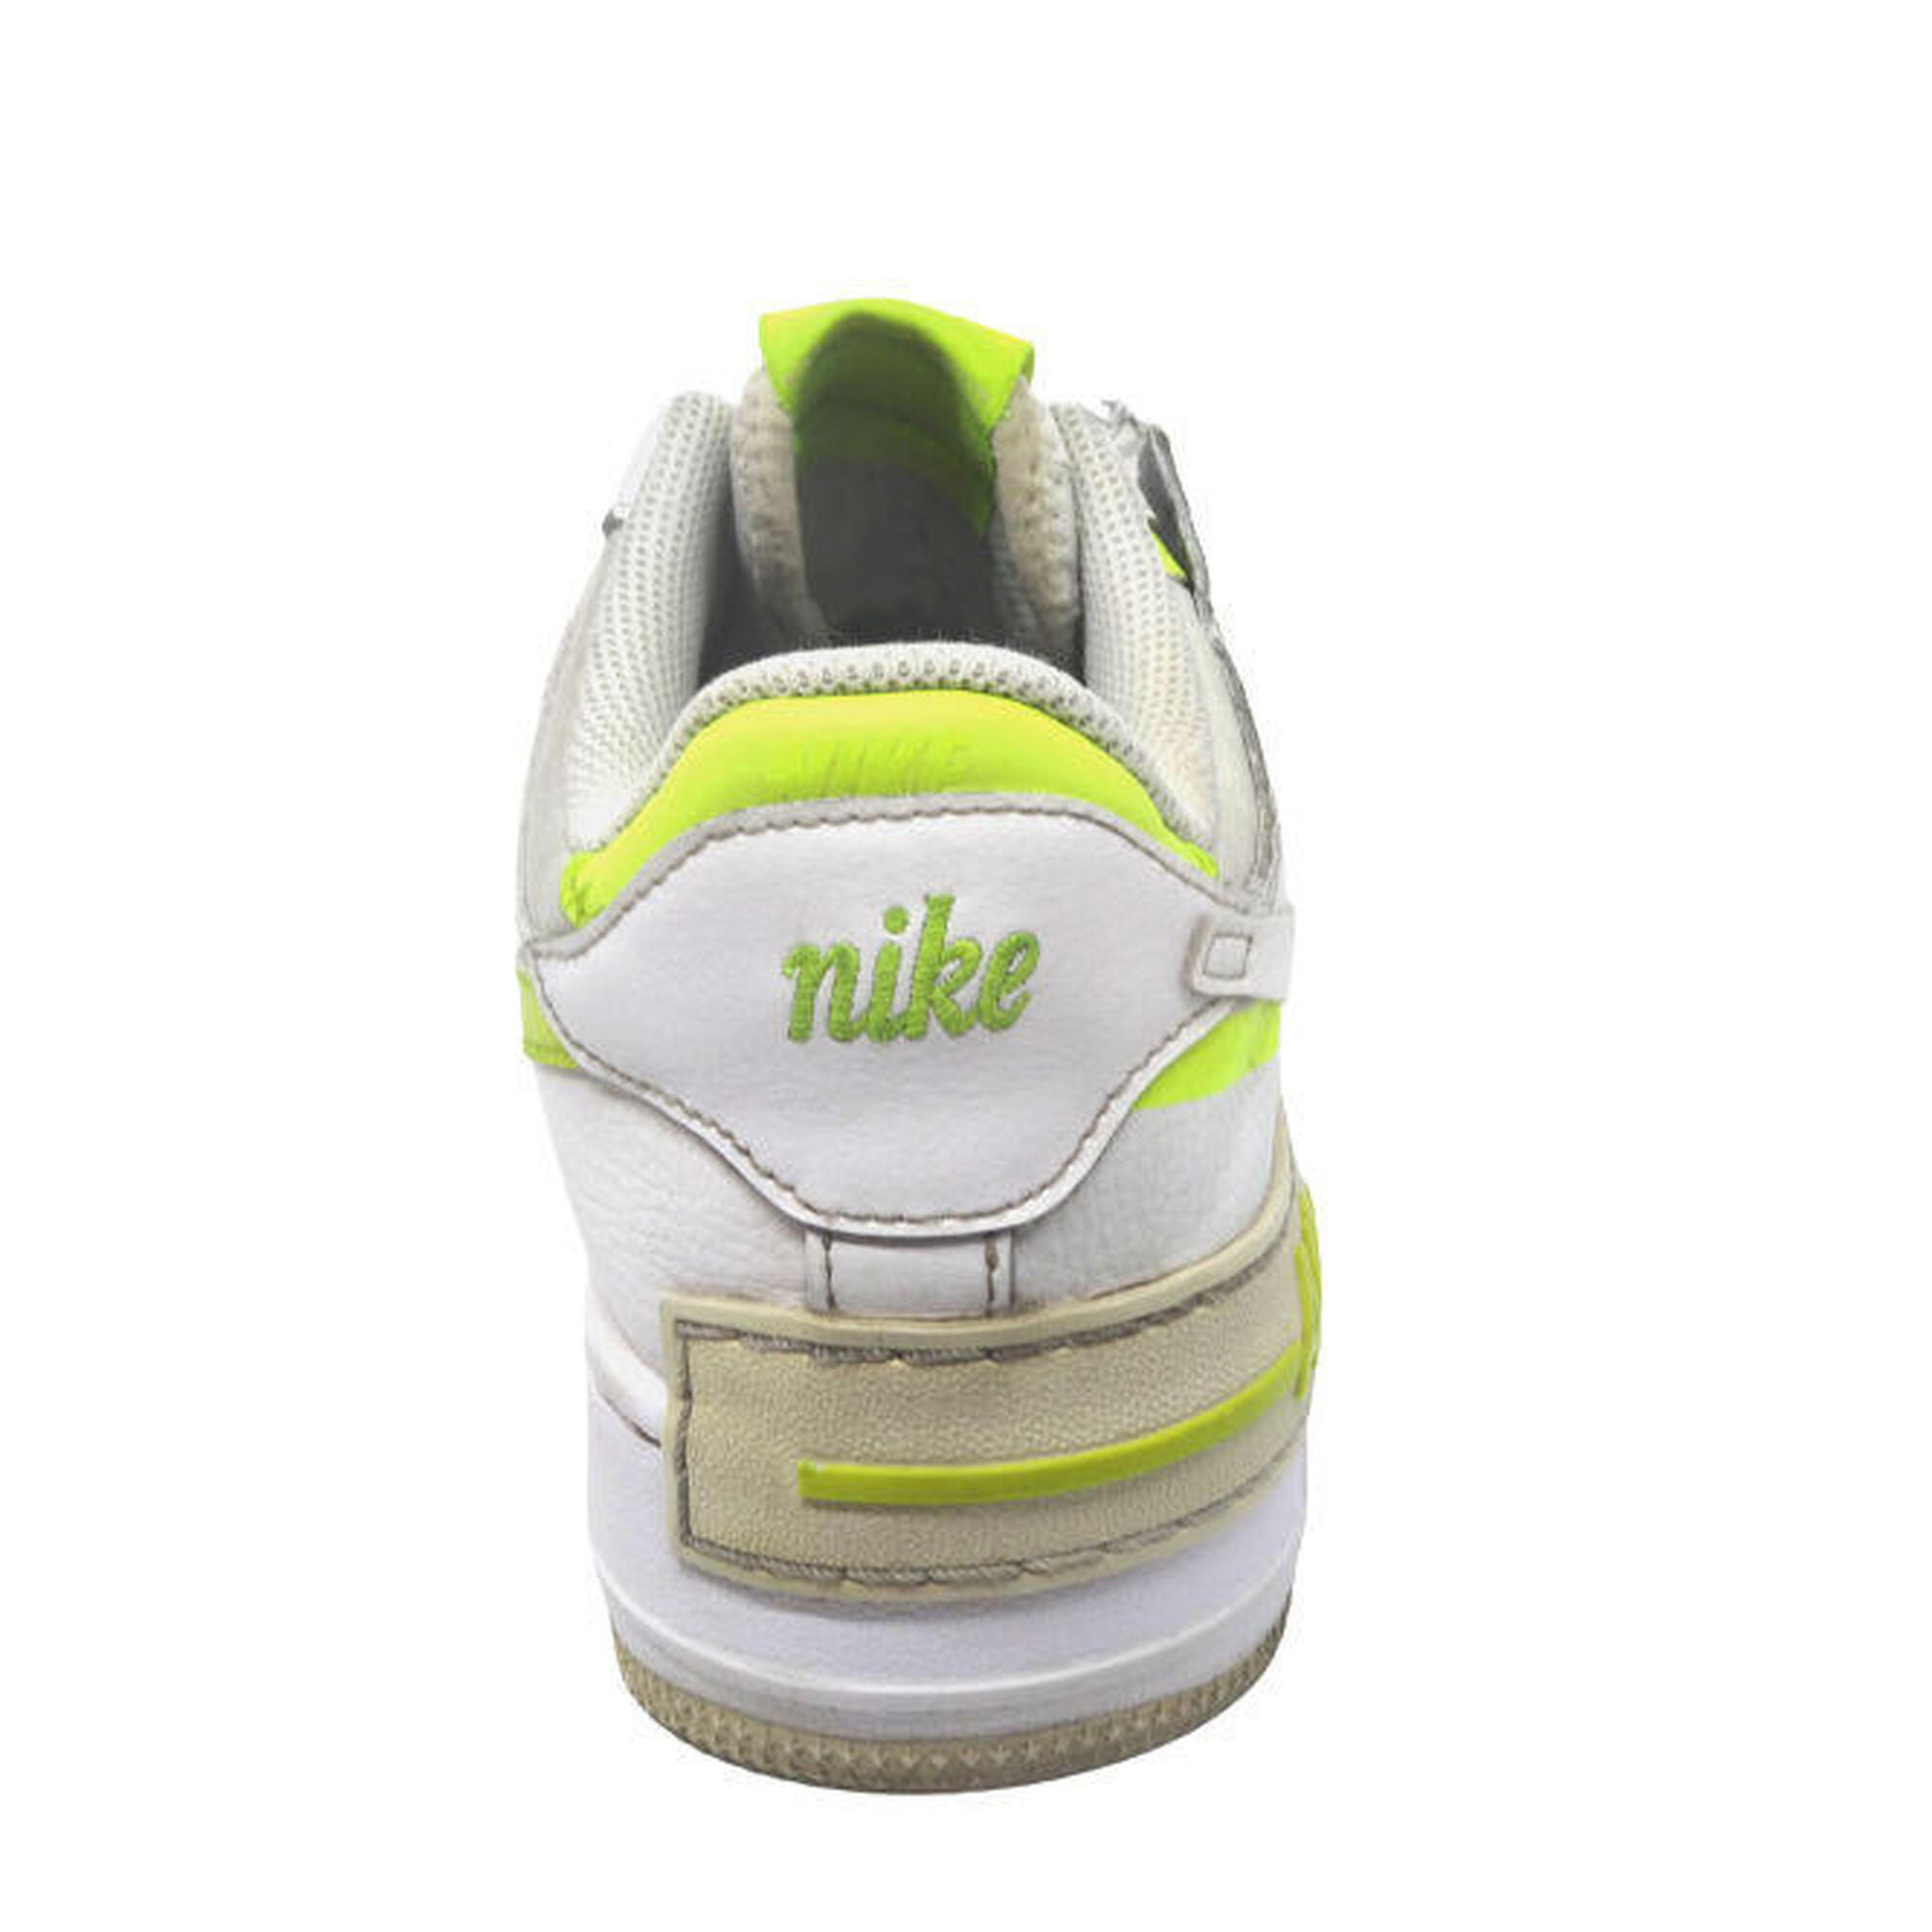 Seconde vie - Air Force - Nike Très bon état